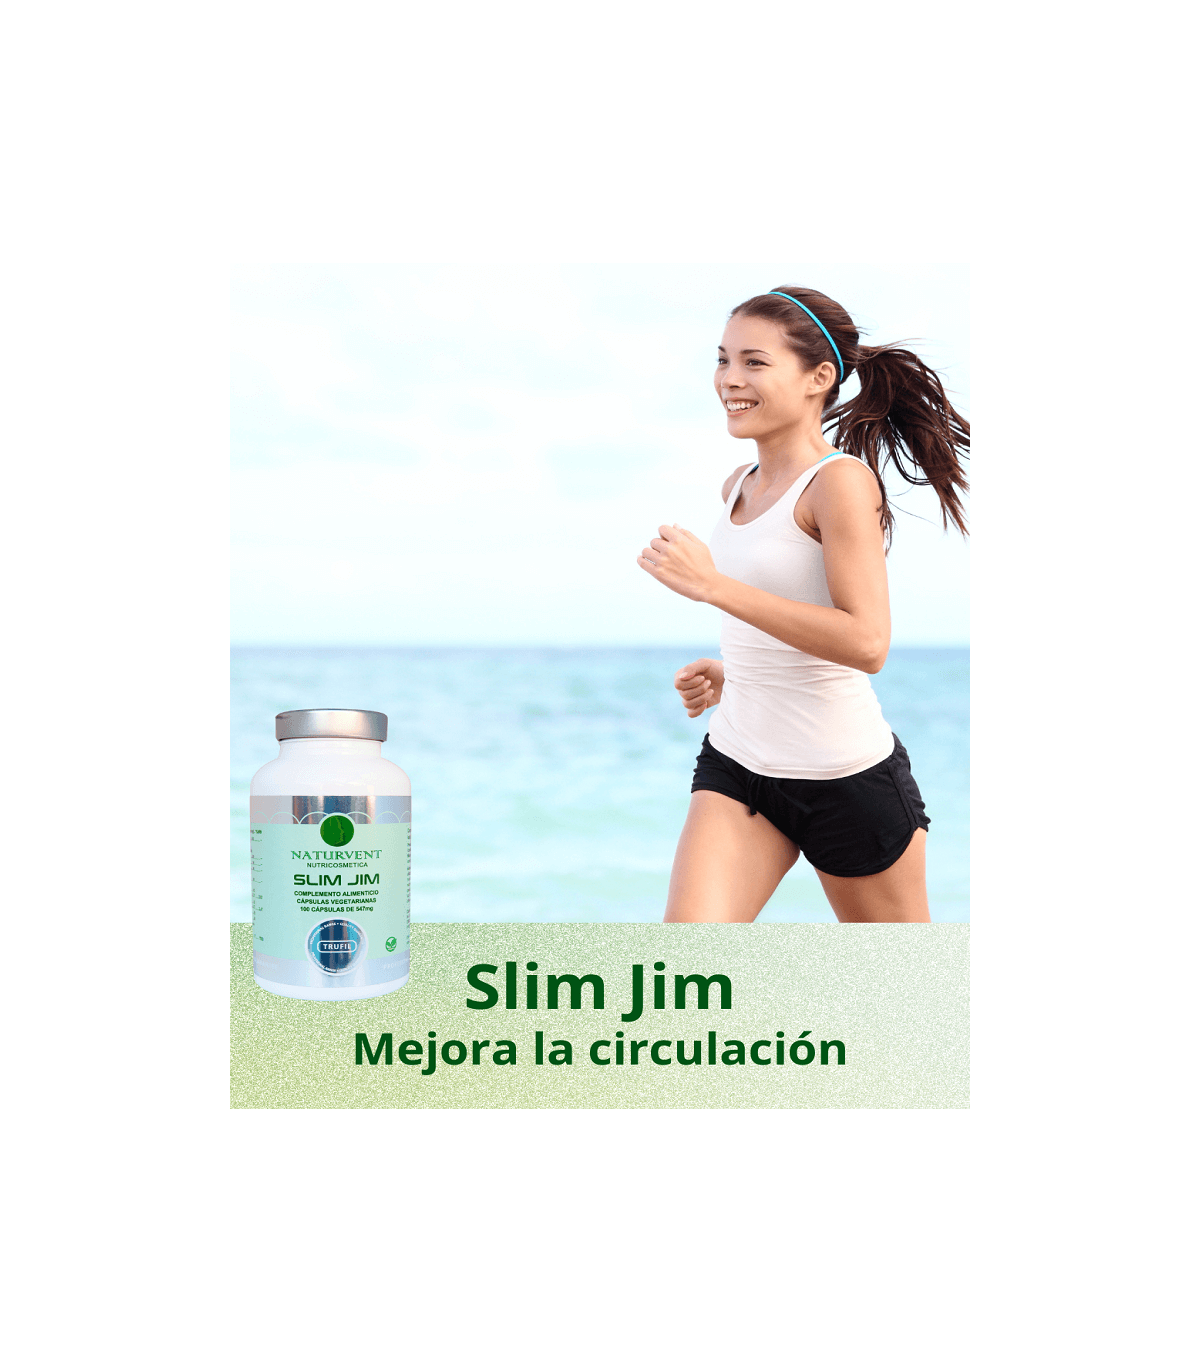 SLIM JIM. Reduce Celulitis, Grasas, Michelines y Piel de Naranja.